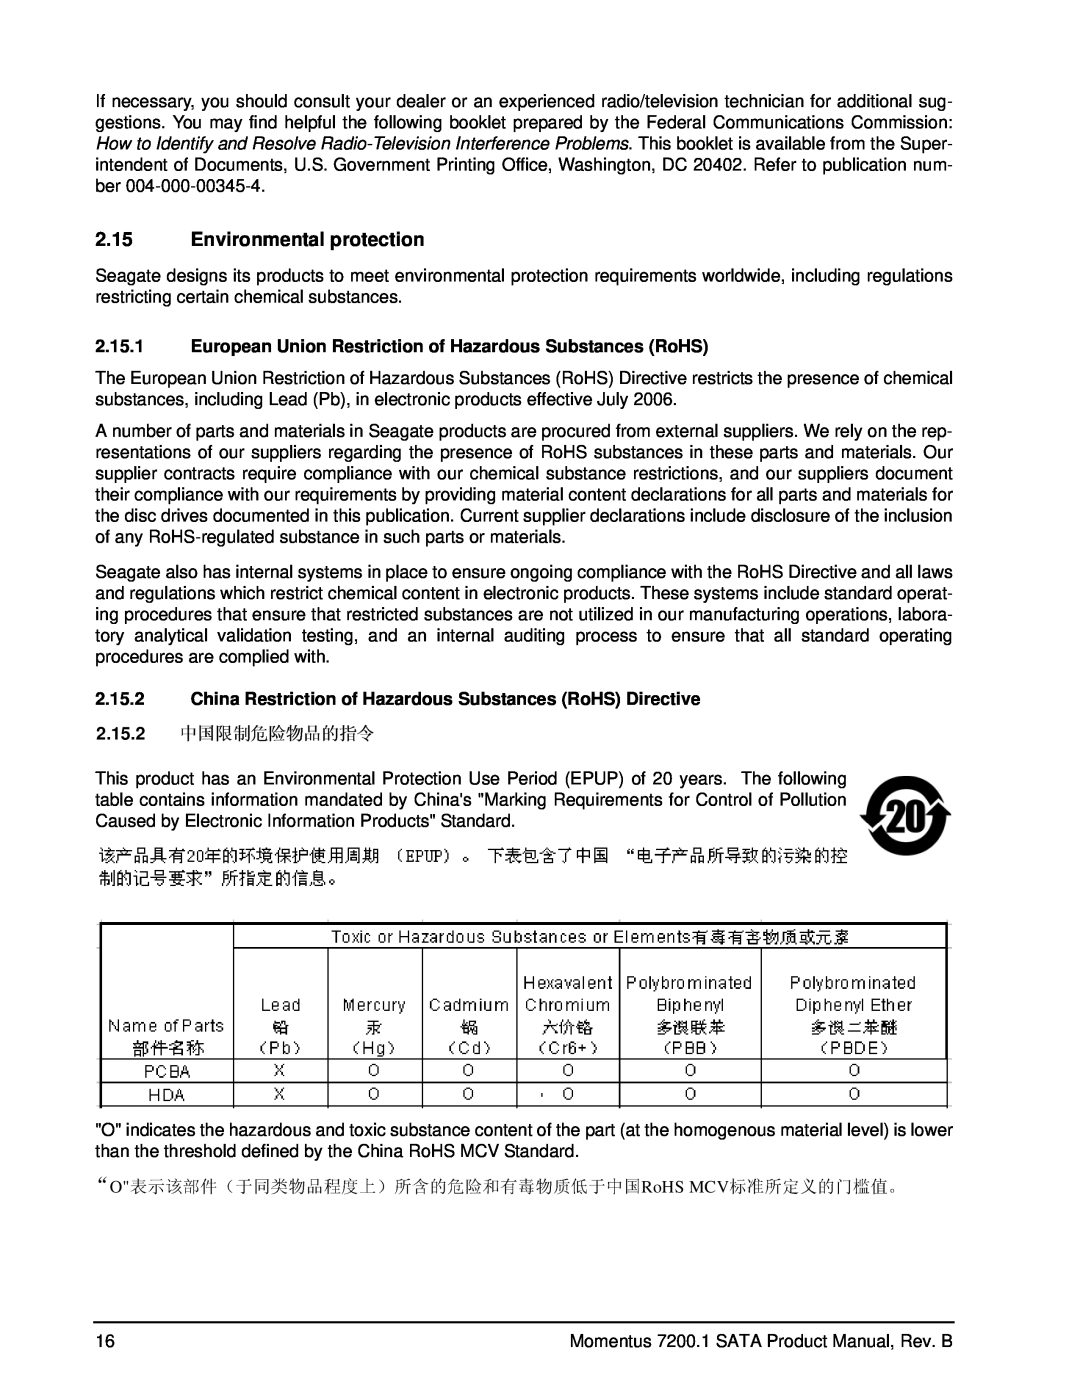 Seagate ST94015AS, ST980825AS Environmental protection, European Union Restriction of Hazardous Substances RoHS, 2.15.2 